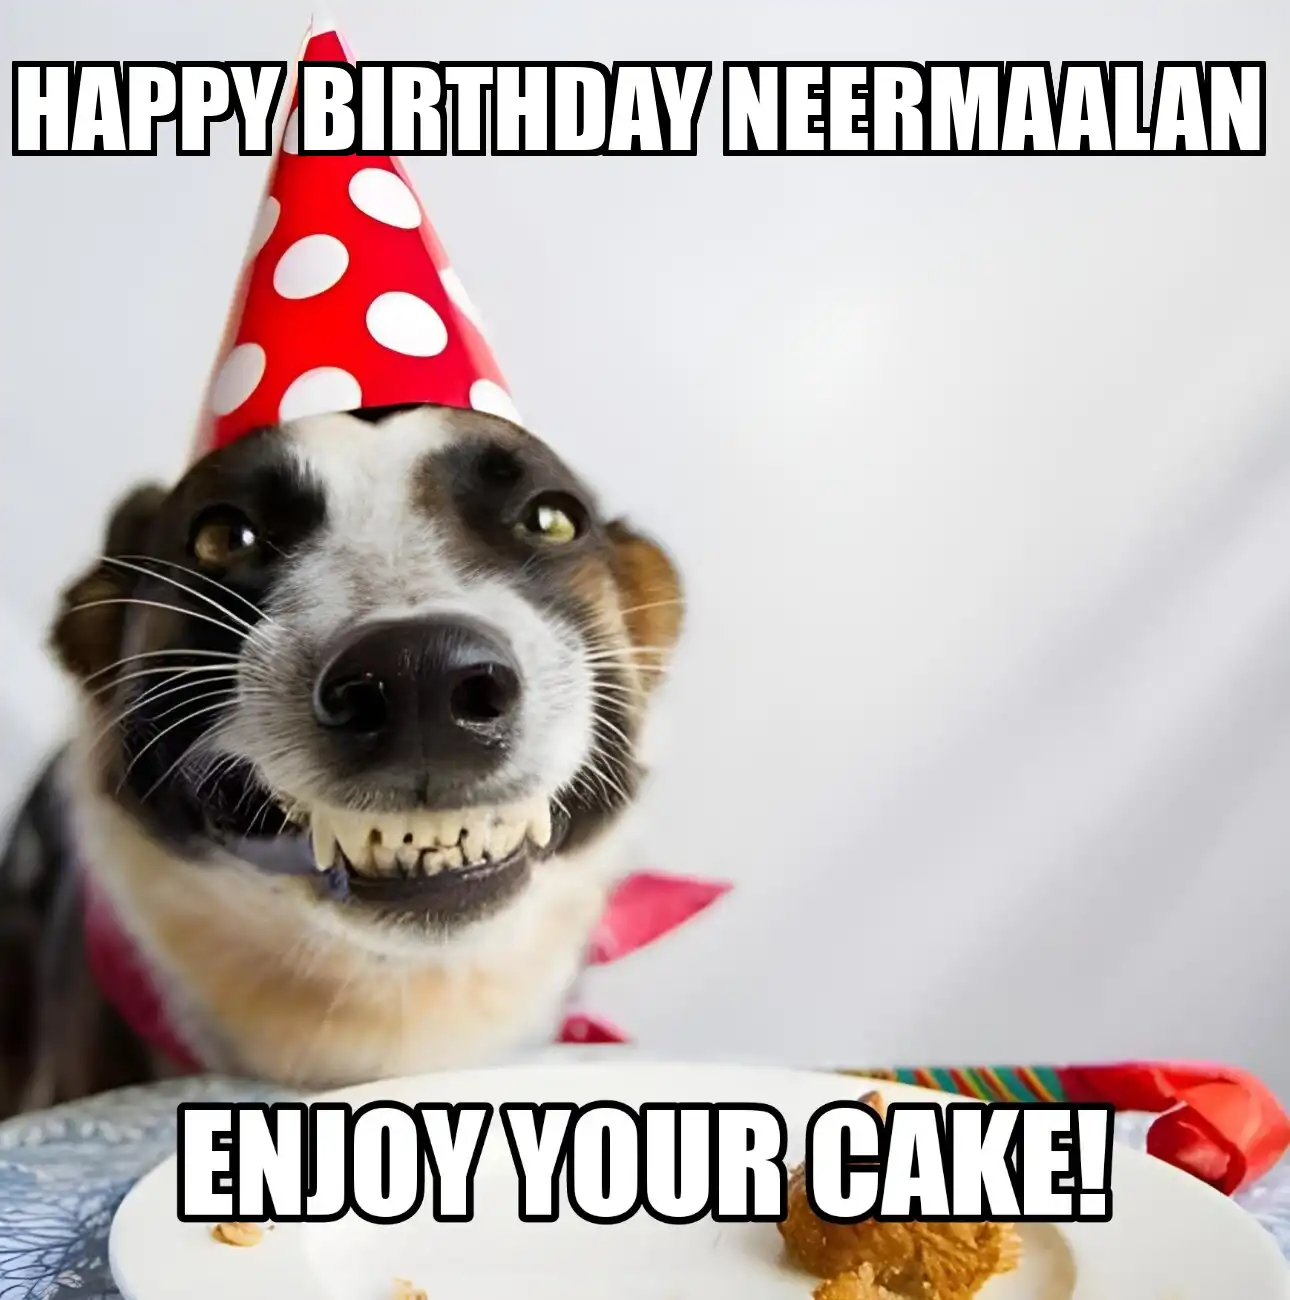 Happy Birthday Neermaalan Enjoy Your Cake Dog Meme